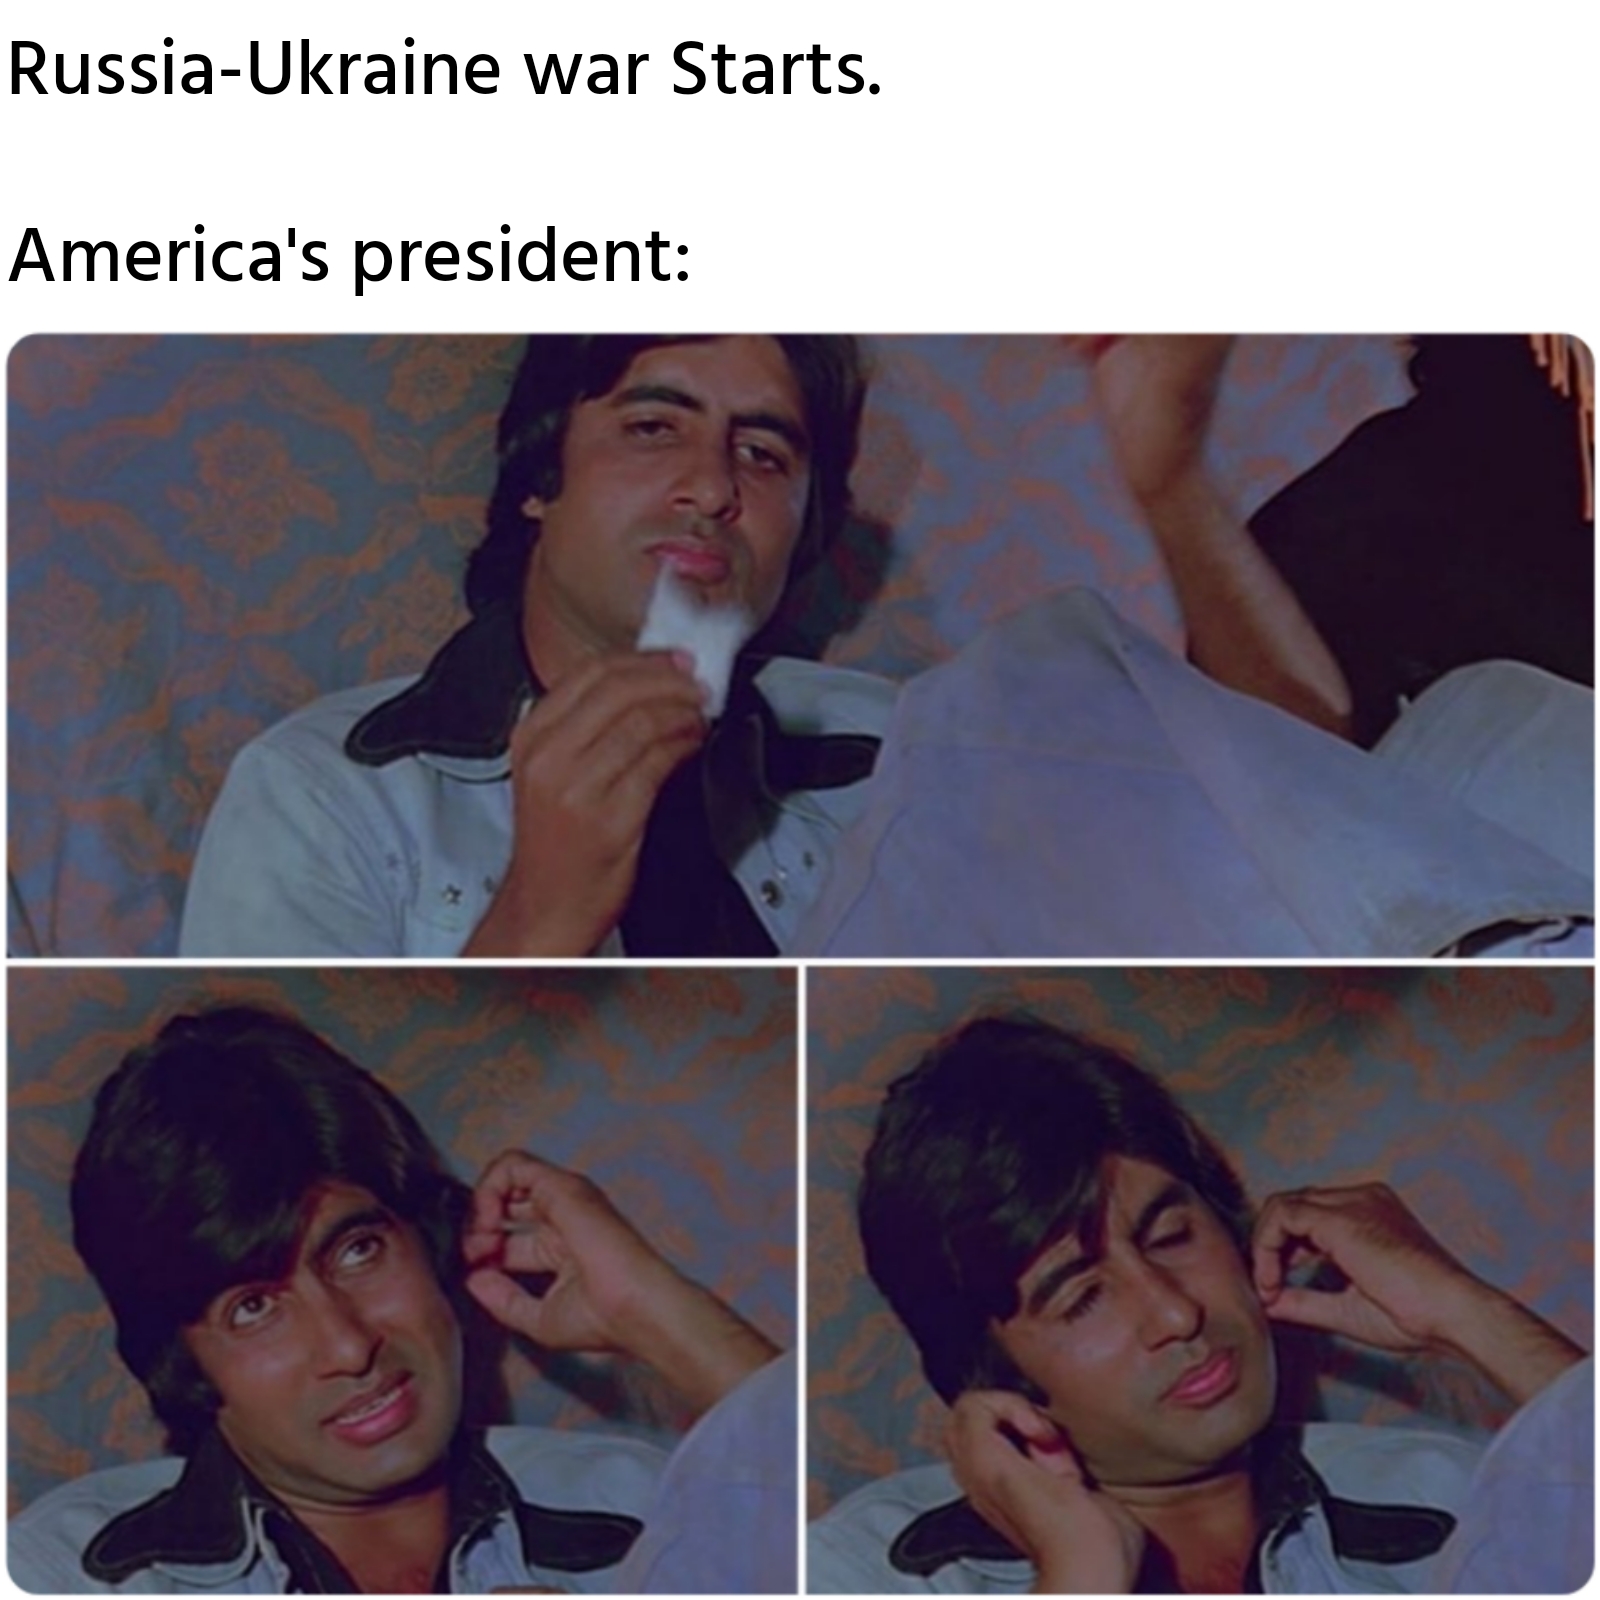 Russia-Ukraine war Starts. Le America's president: meme.jpg